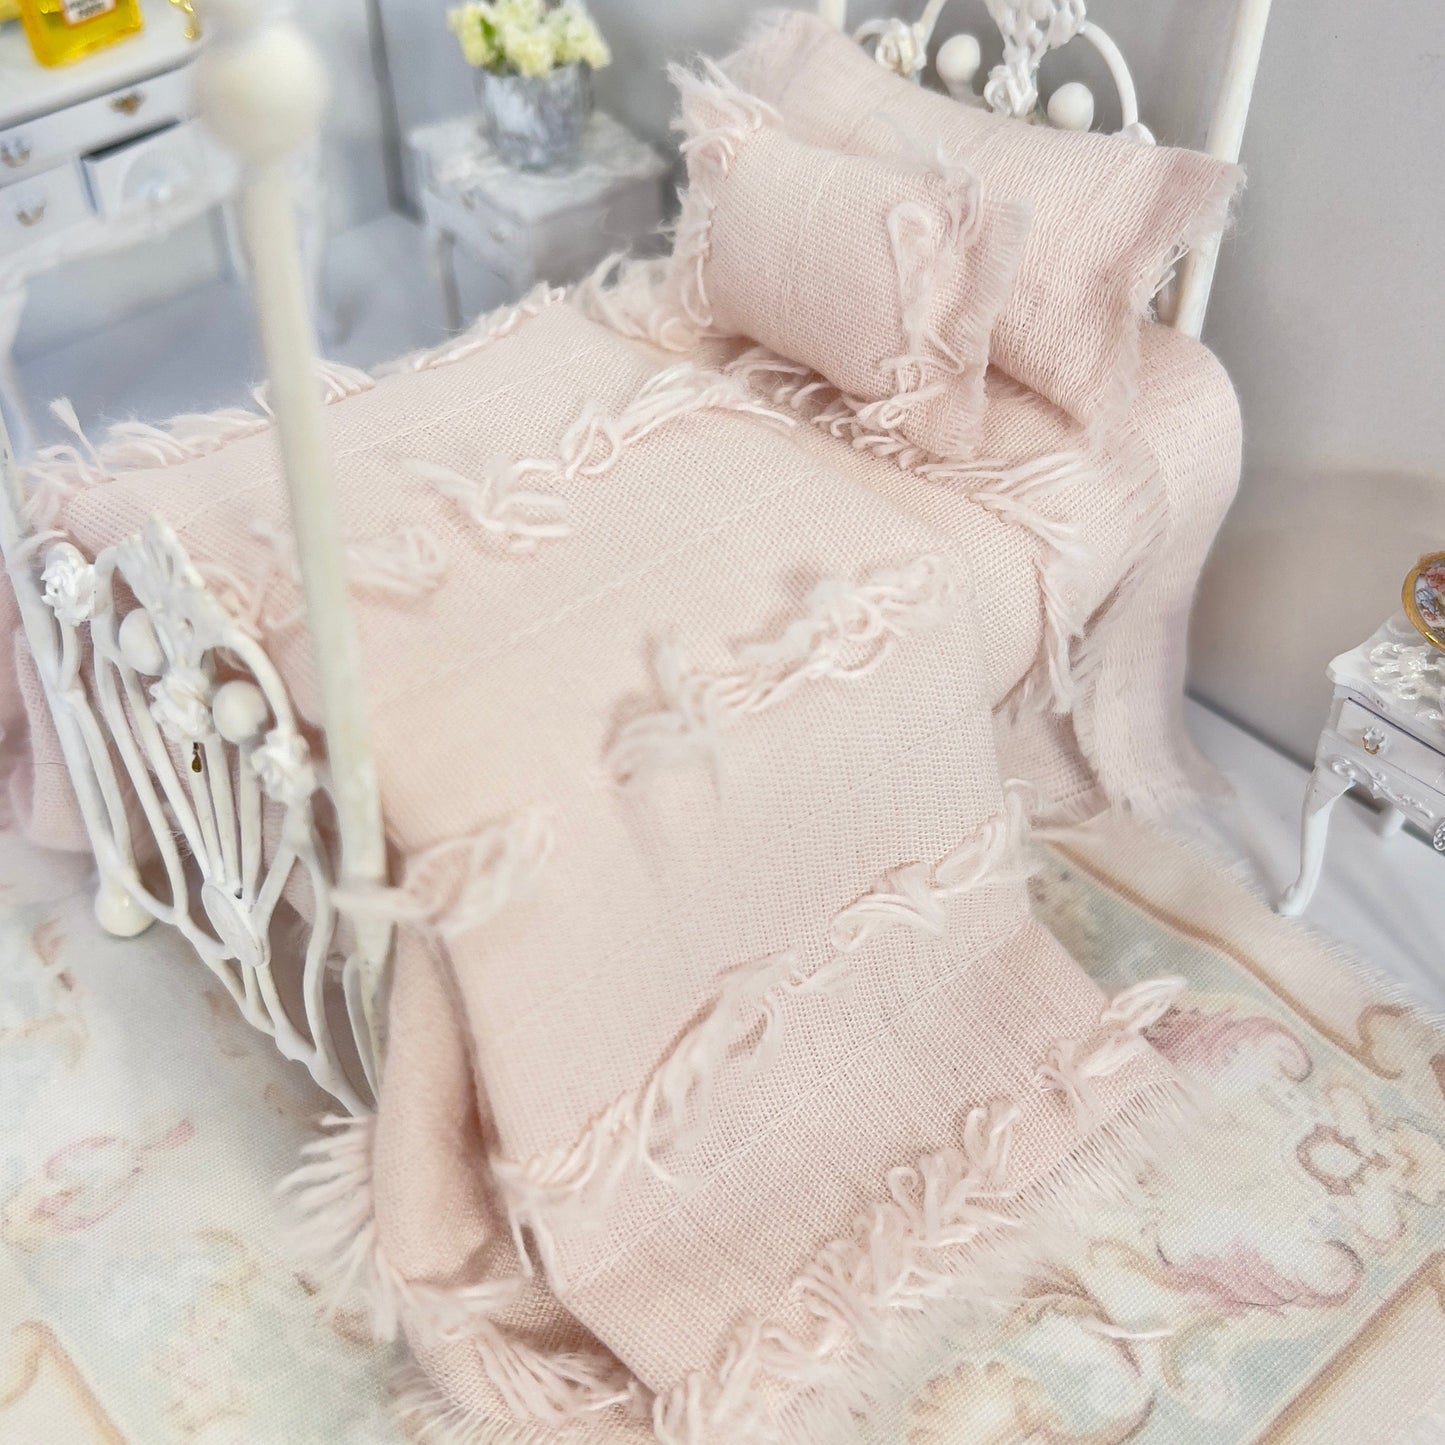 CHANTALLENA Dollhouse Accessories 1:24 Scale |Four Piece Dusty Pink Textured Cottone Dollhouse Bedding Set | Petite Dustie